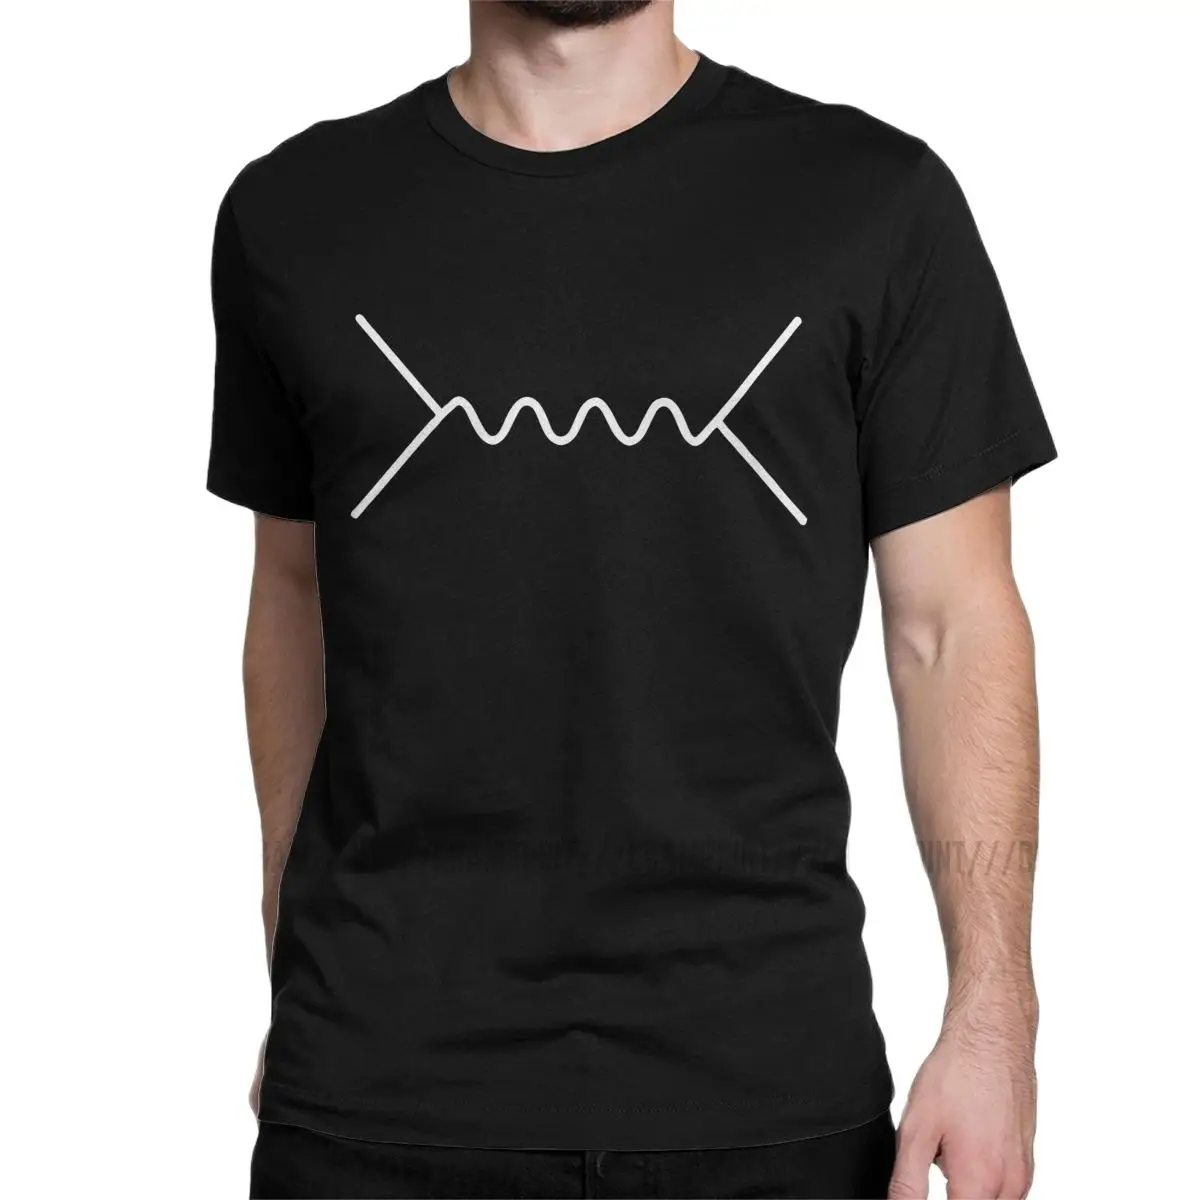 

Feynman Diagram T-Shirt Men Quantum Mechanics Physics Science Physical Geek Nerd Tees Short Sleeve T Shirt Summer Clothes